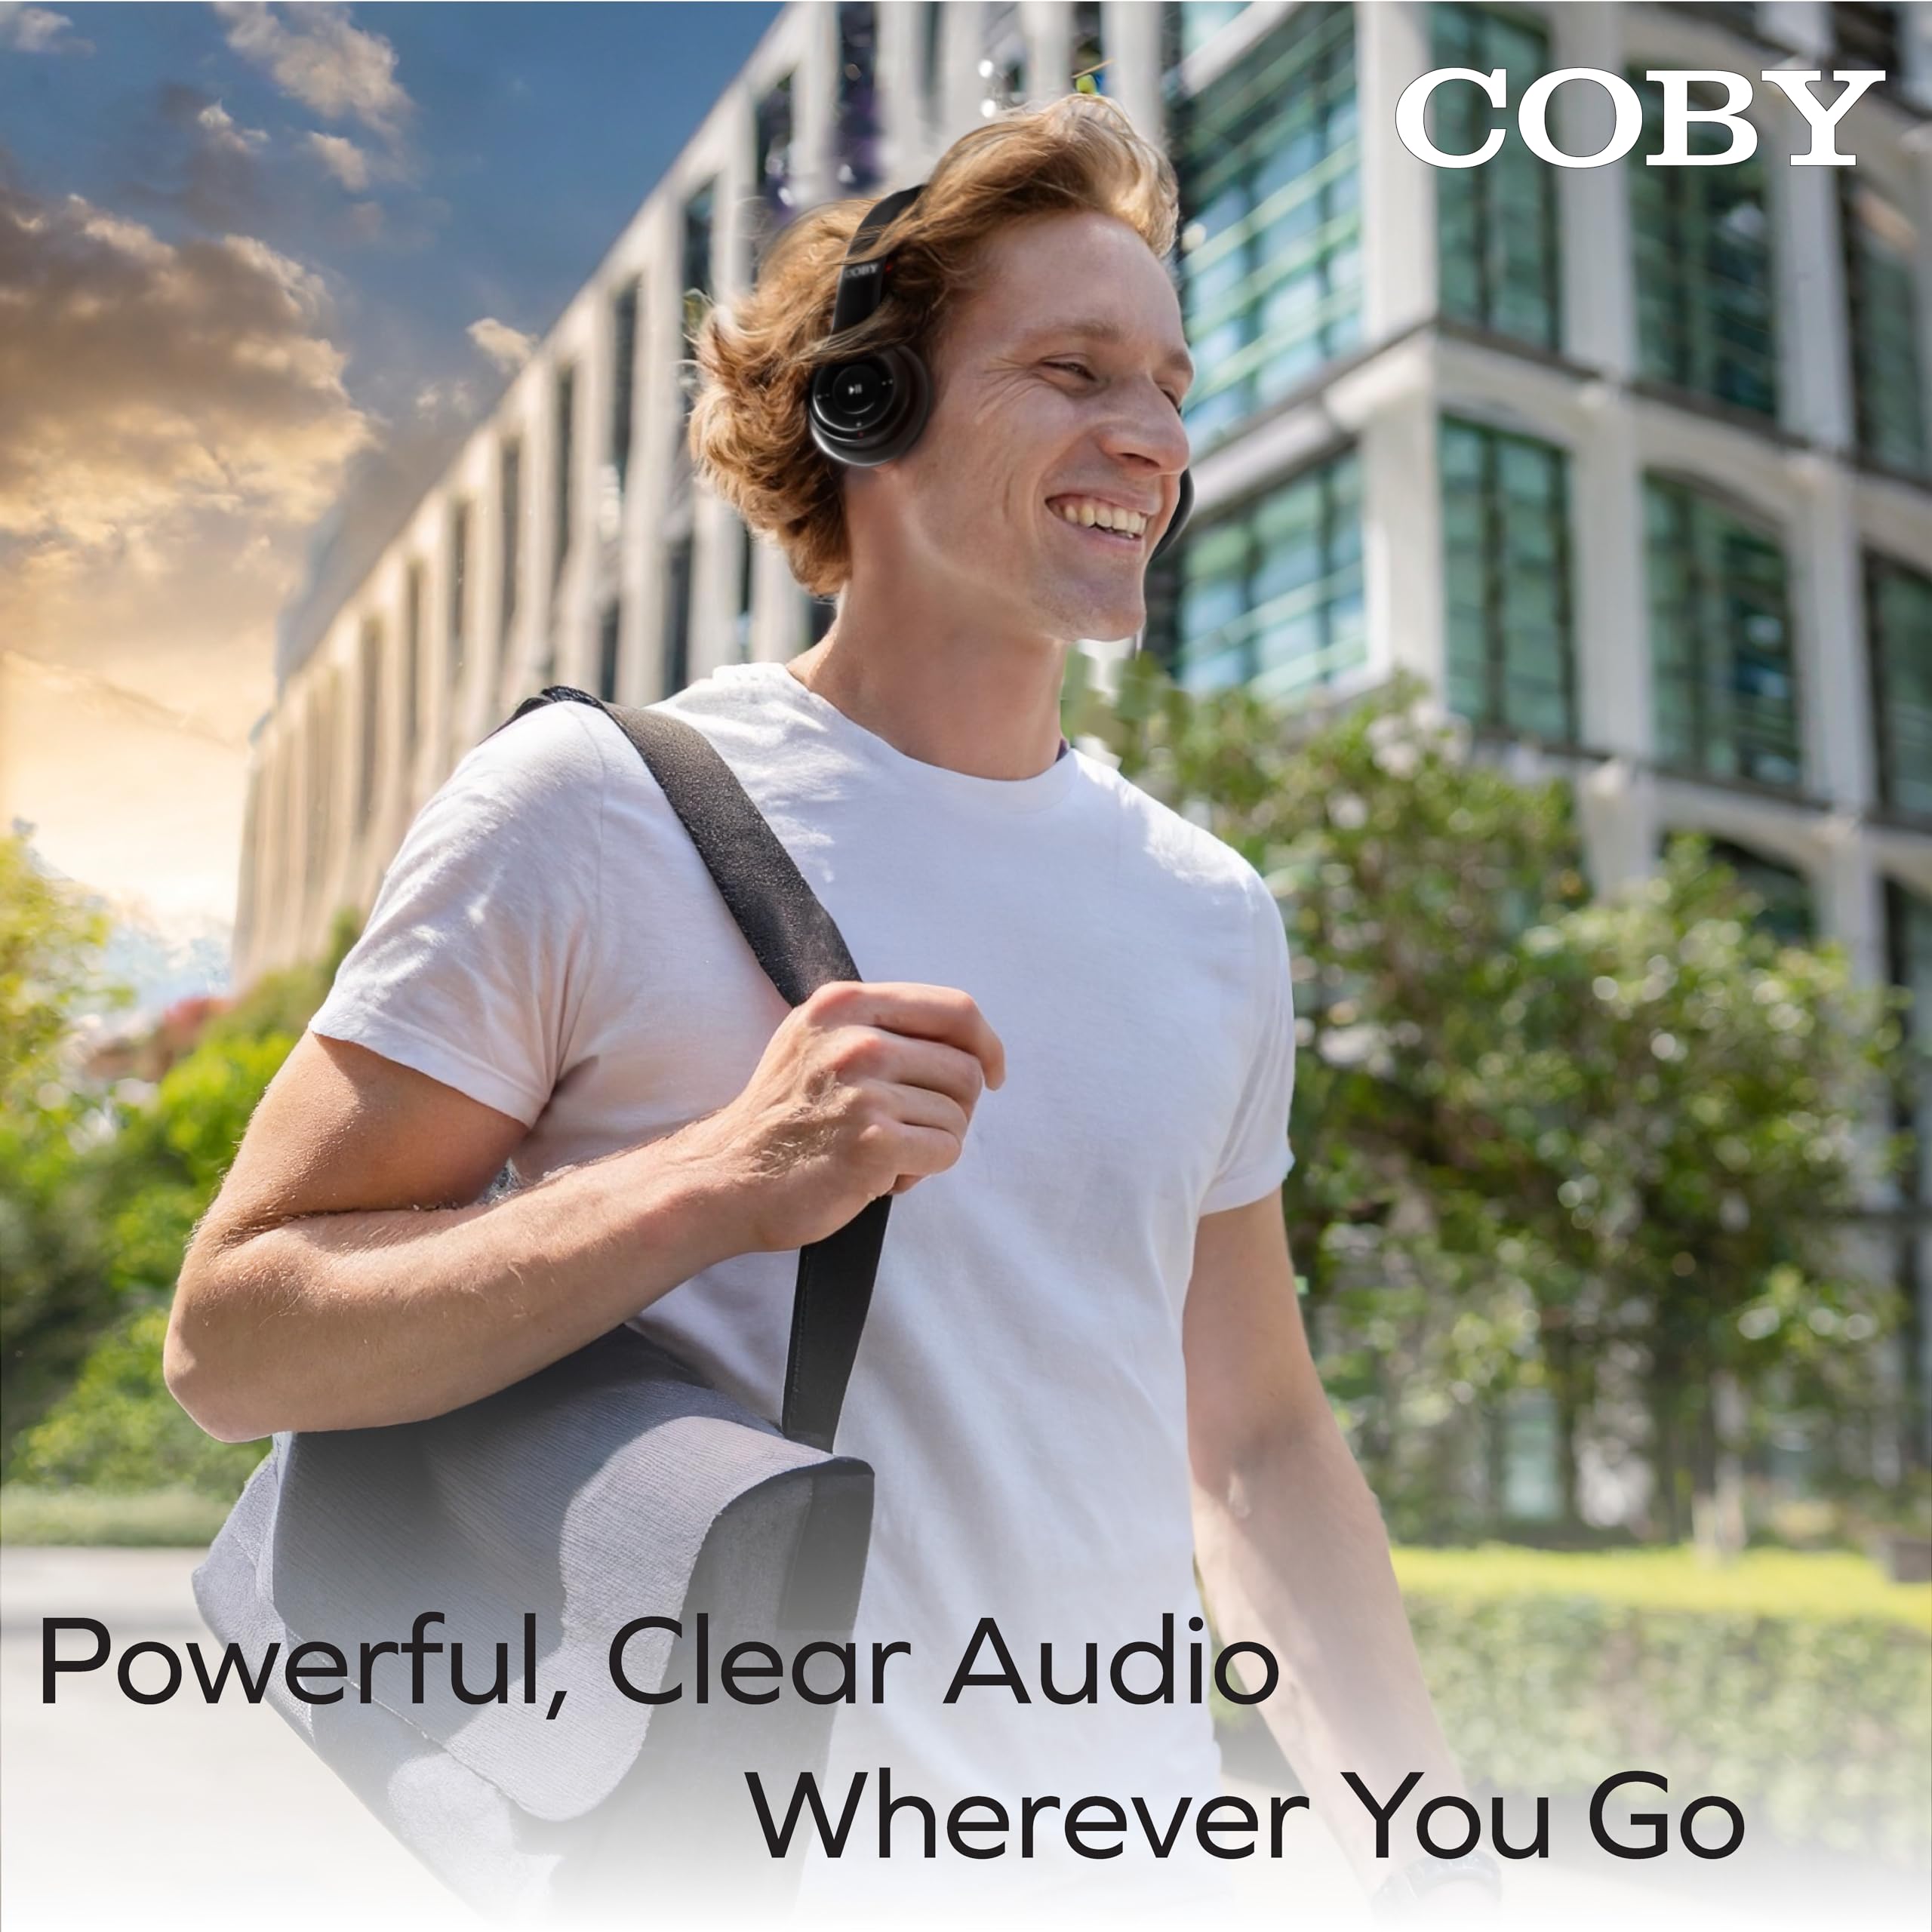 Coby Bluetooth Headphones